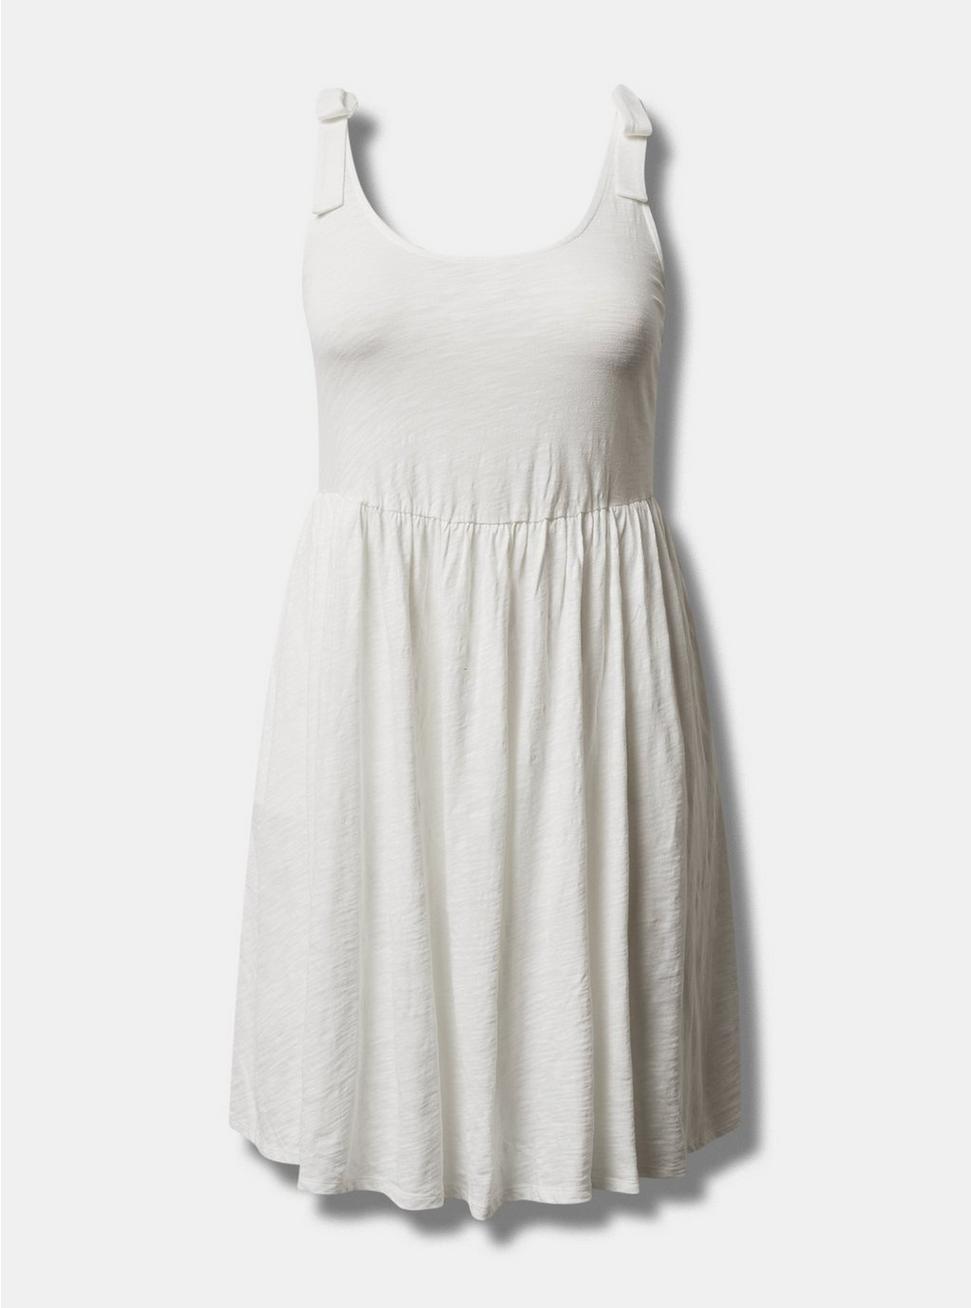 Mini Cotton Slub Tie Shoulder Beach Dress, IVORY, hi-res